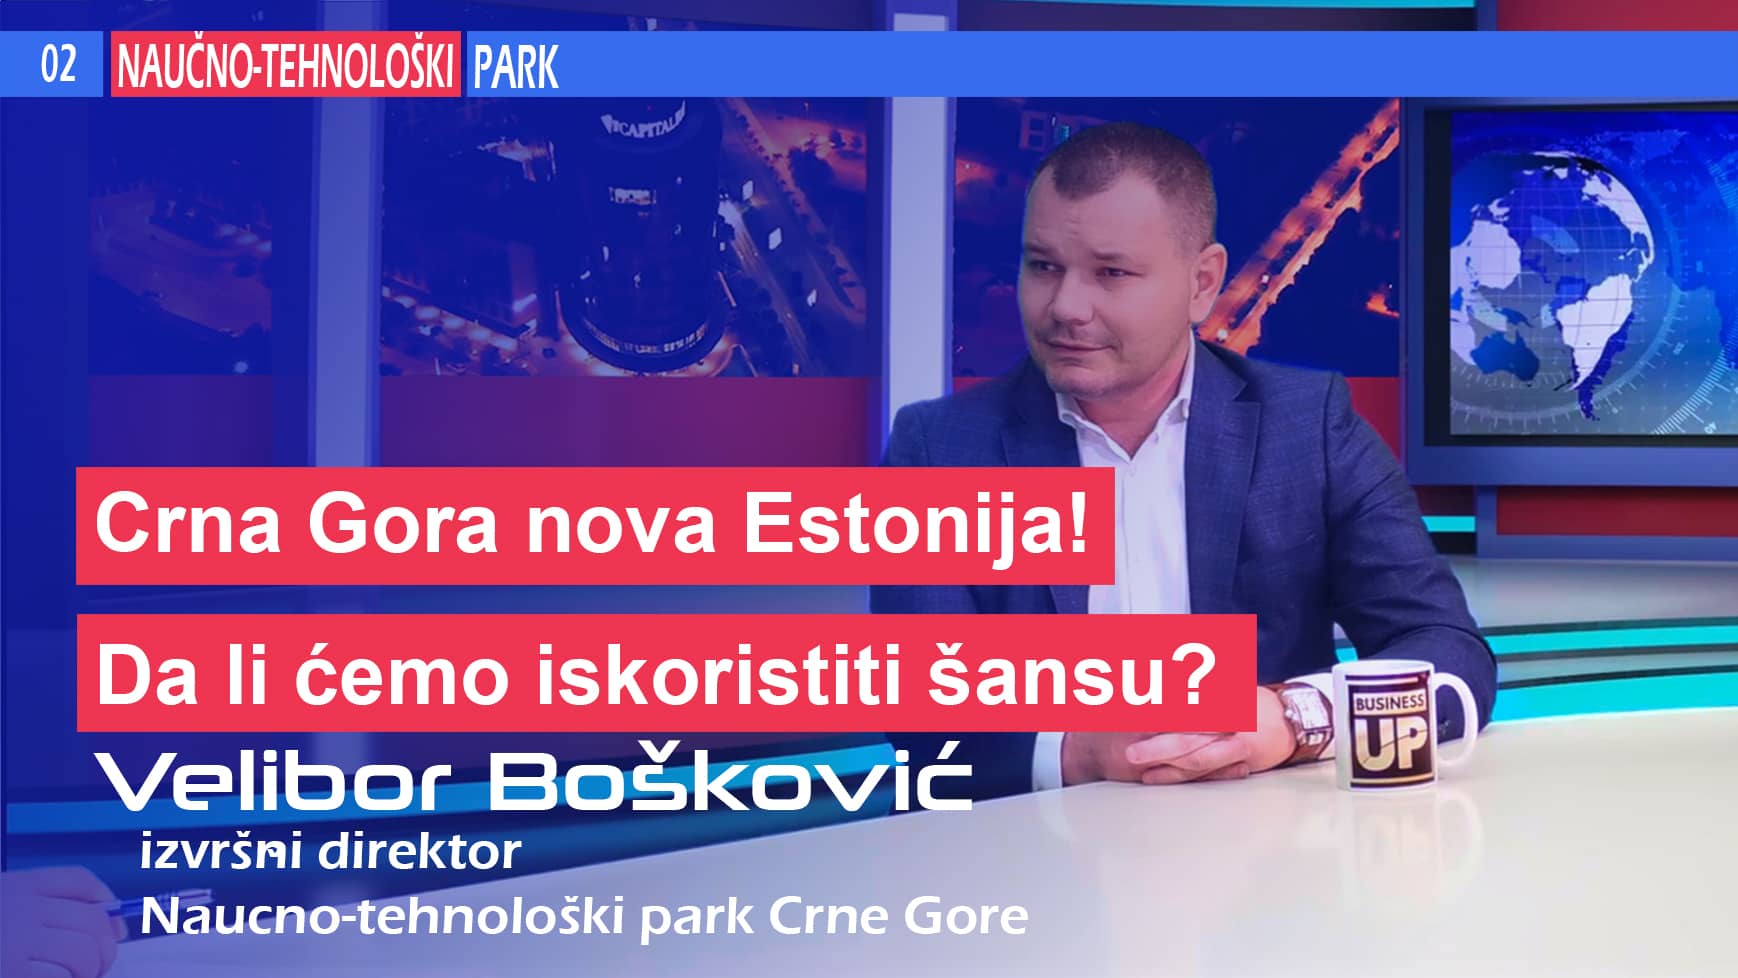 Velibor-Bošković-Naučno tehnološki park Crne Gore